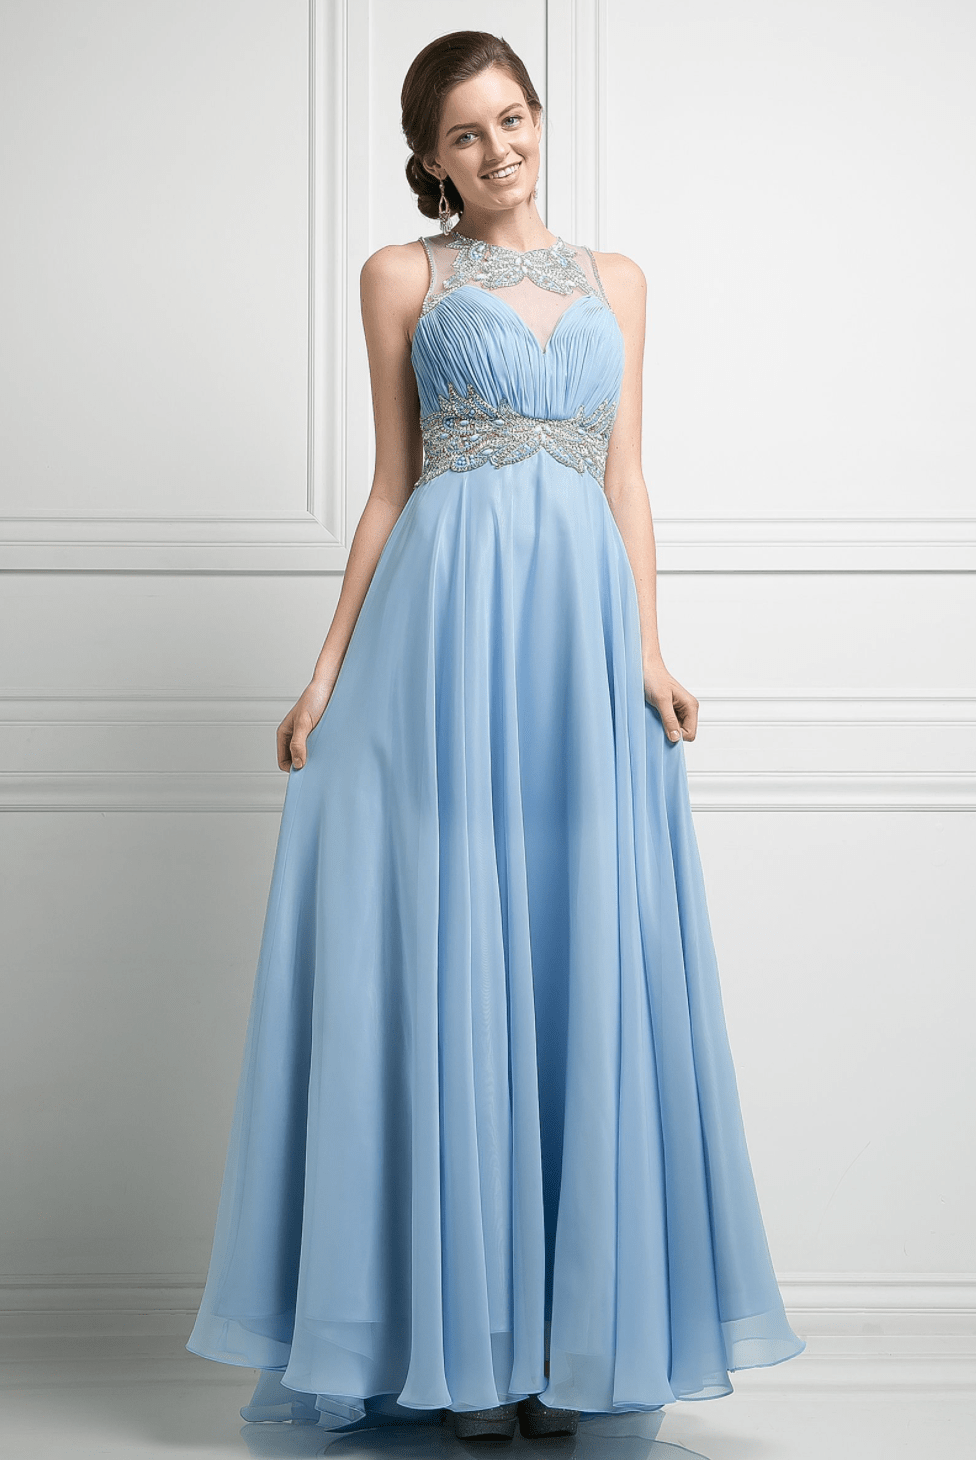 Beaded Chiffon Empire Waist Dress by Cinderella Divine - NORMA REED